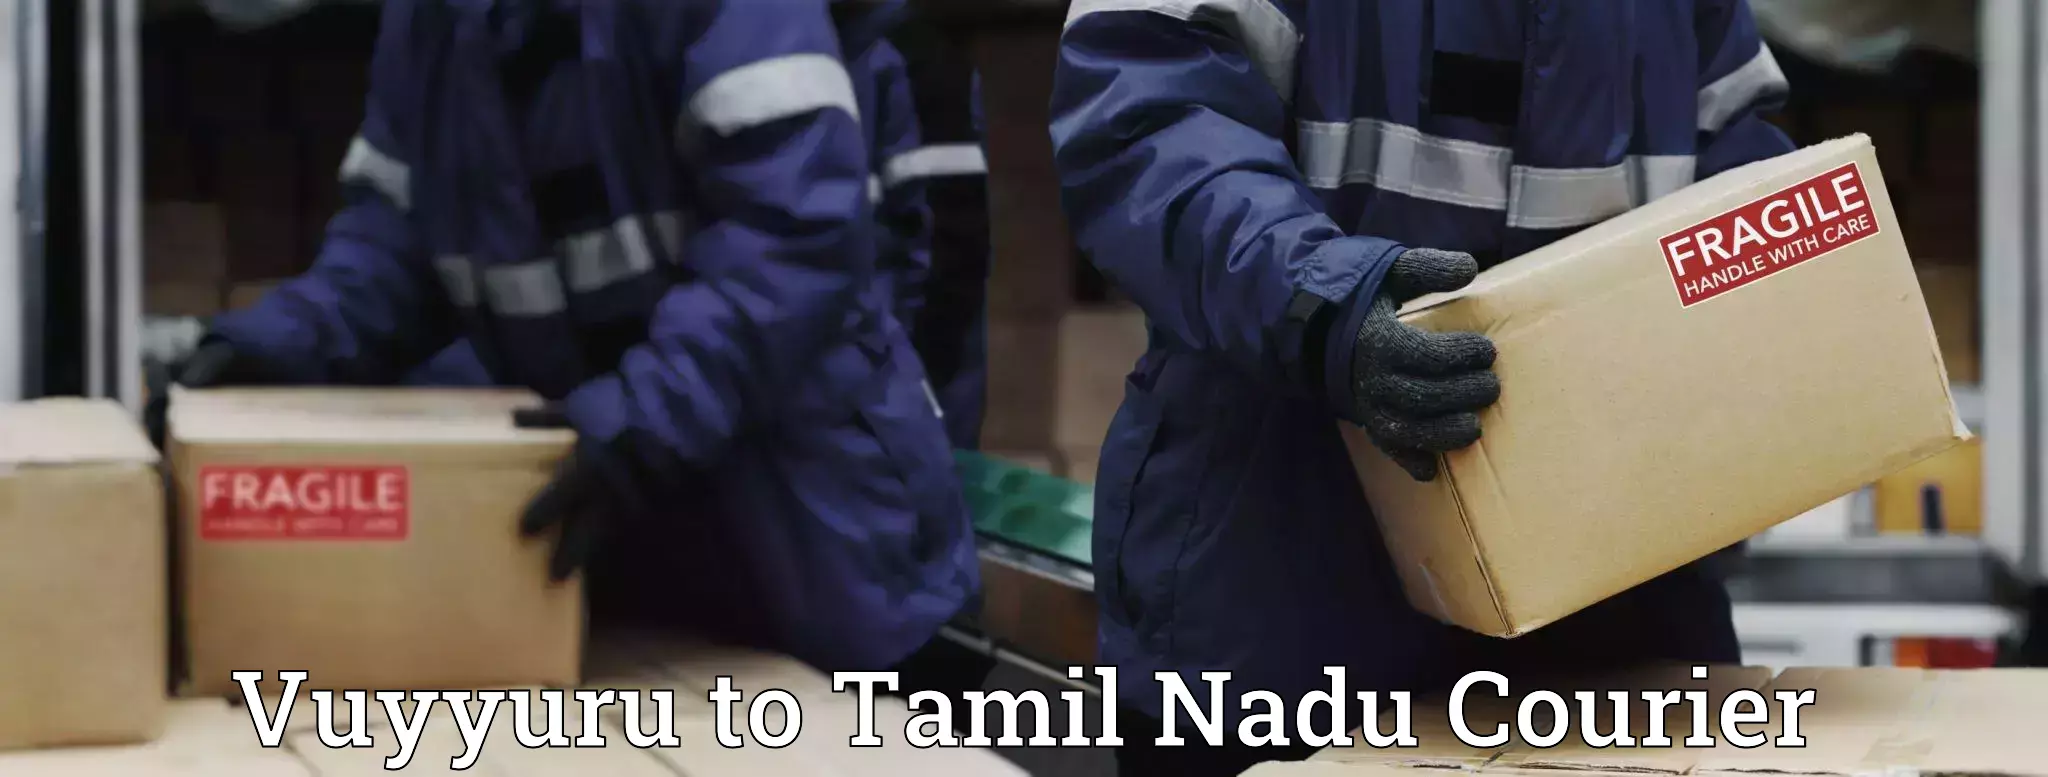 Courier membership Vuyyuru to Tamil Nadu